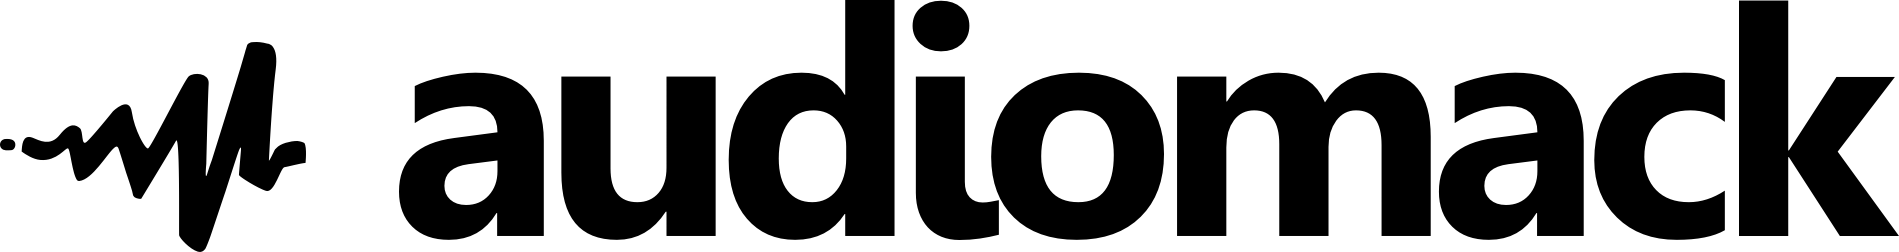 audiomack logo.png